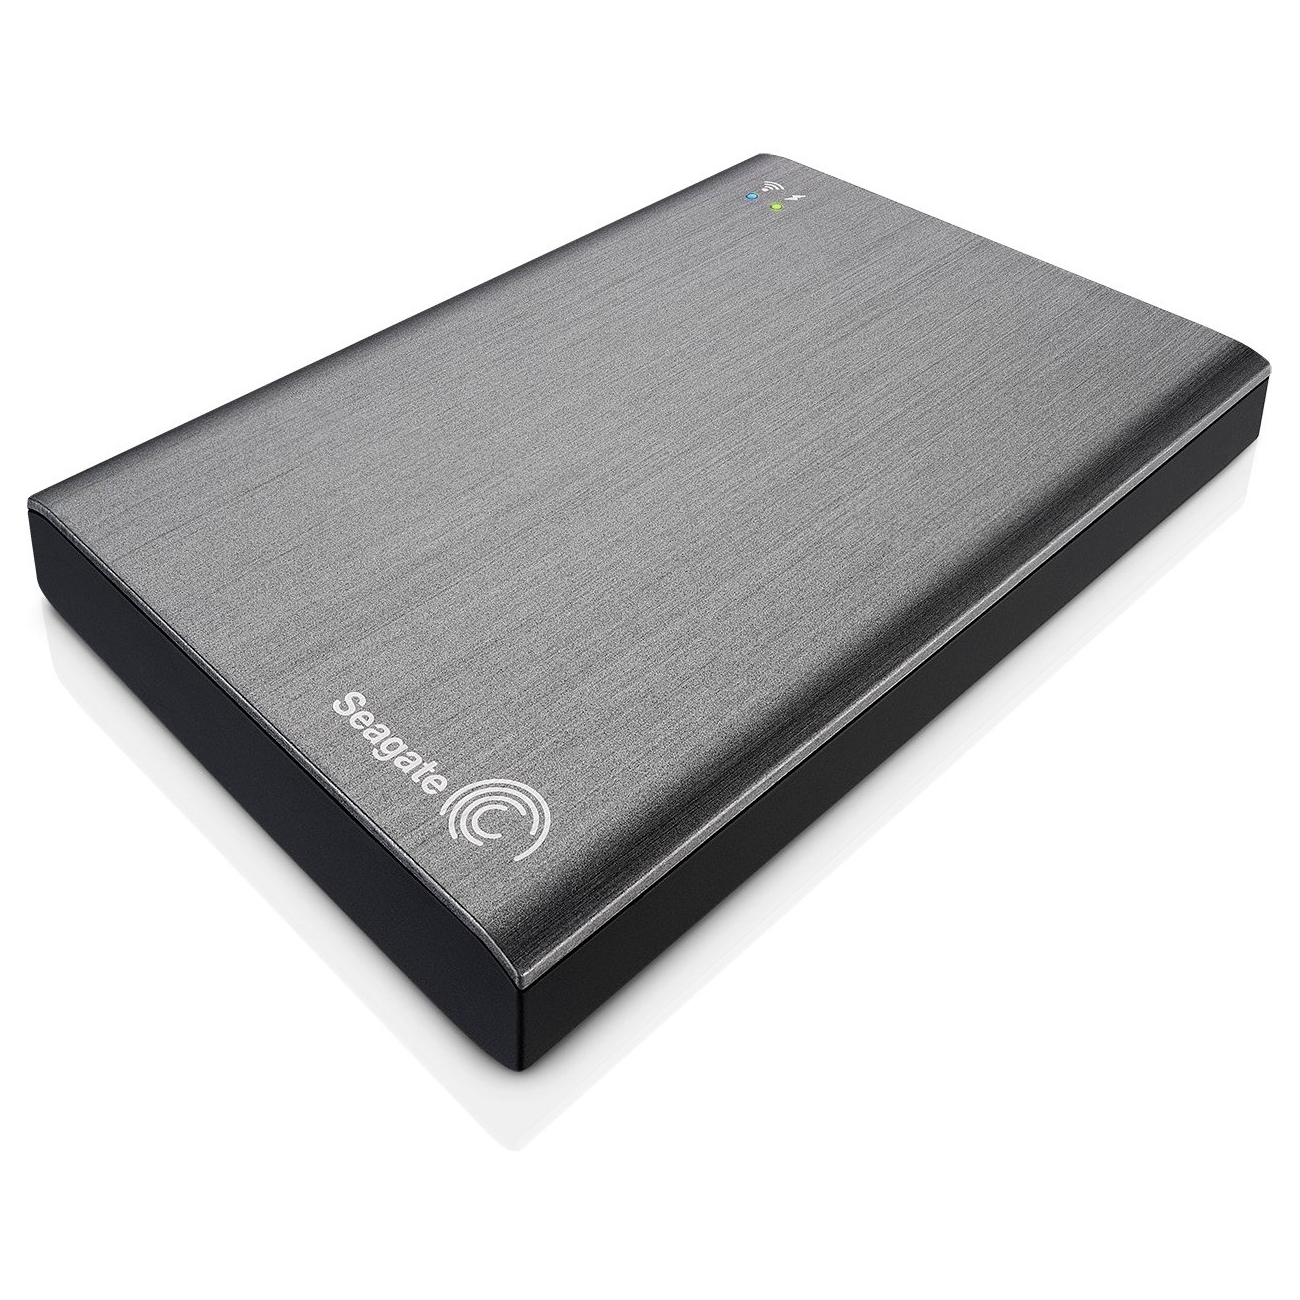 Внешний жесткий диск Seagate USB 3.0 1Tb STCK1000200 Black